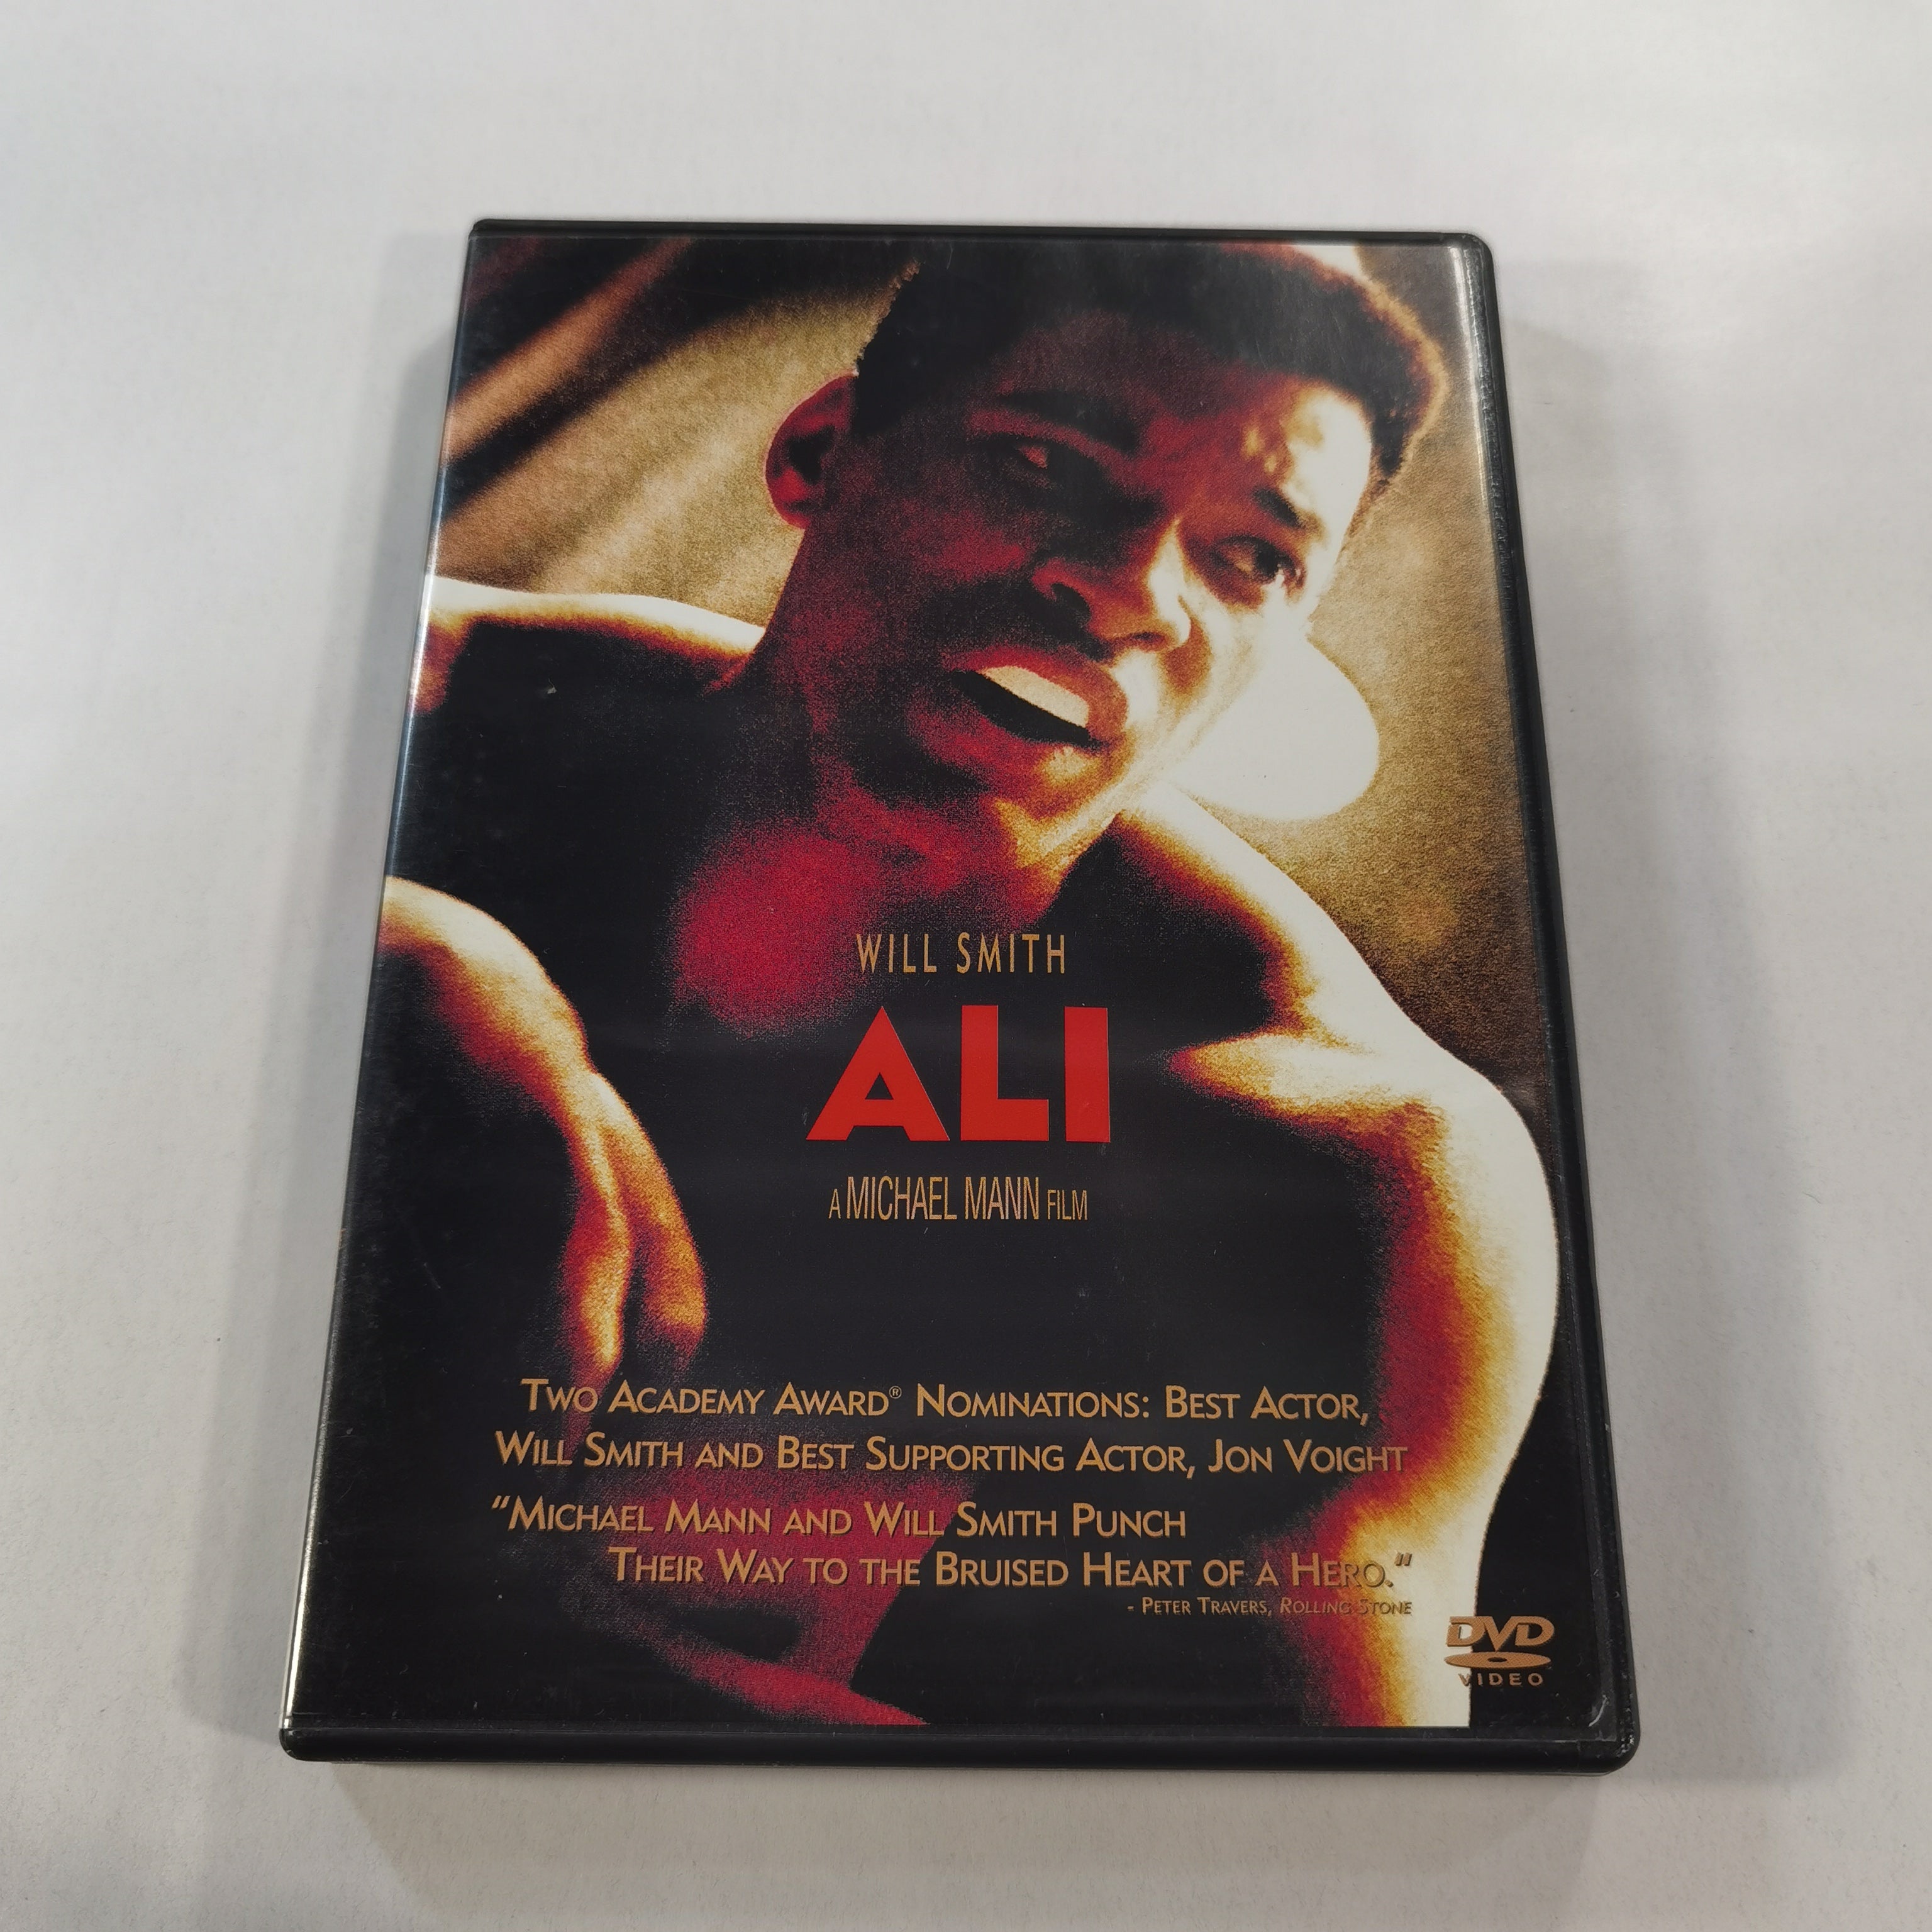 Ali (2001) - DVD US 2002